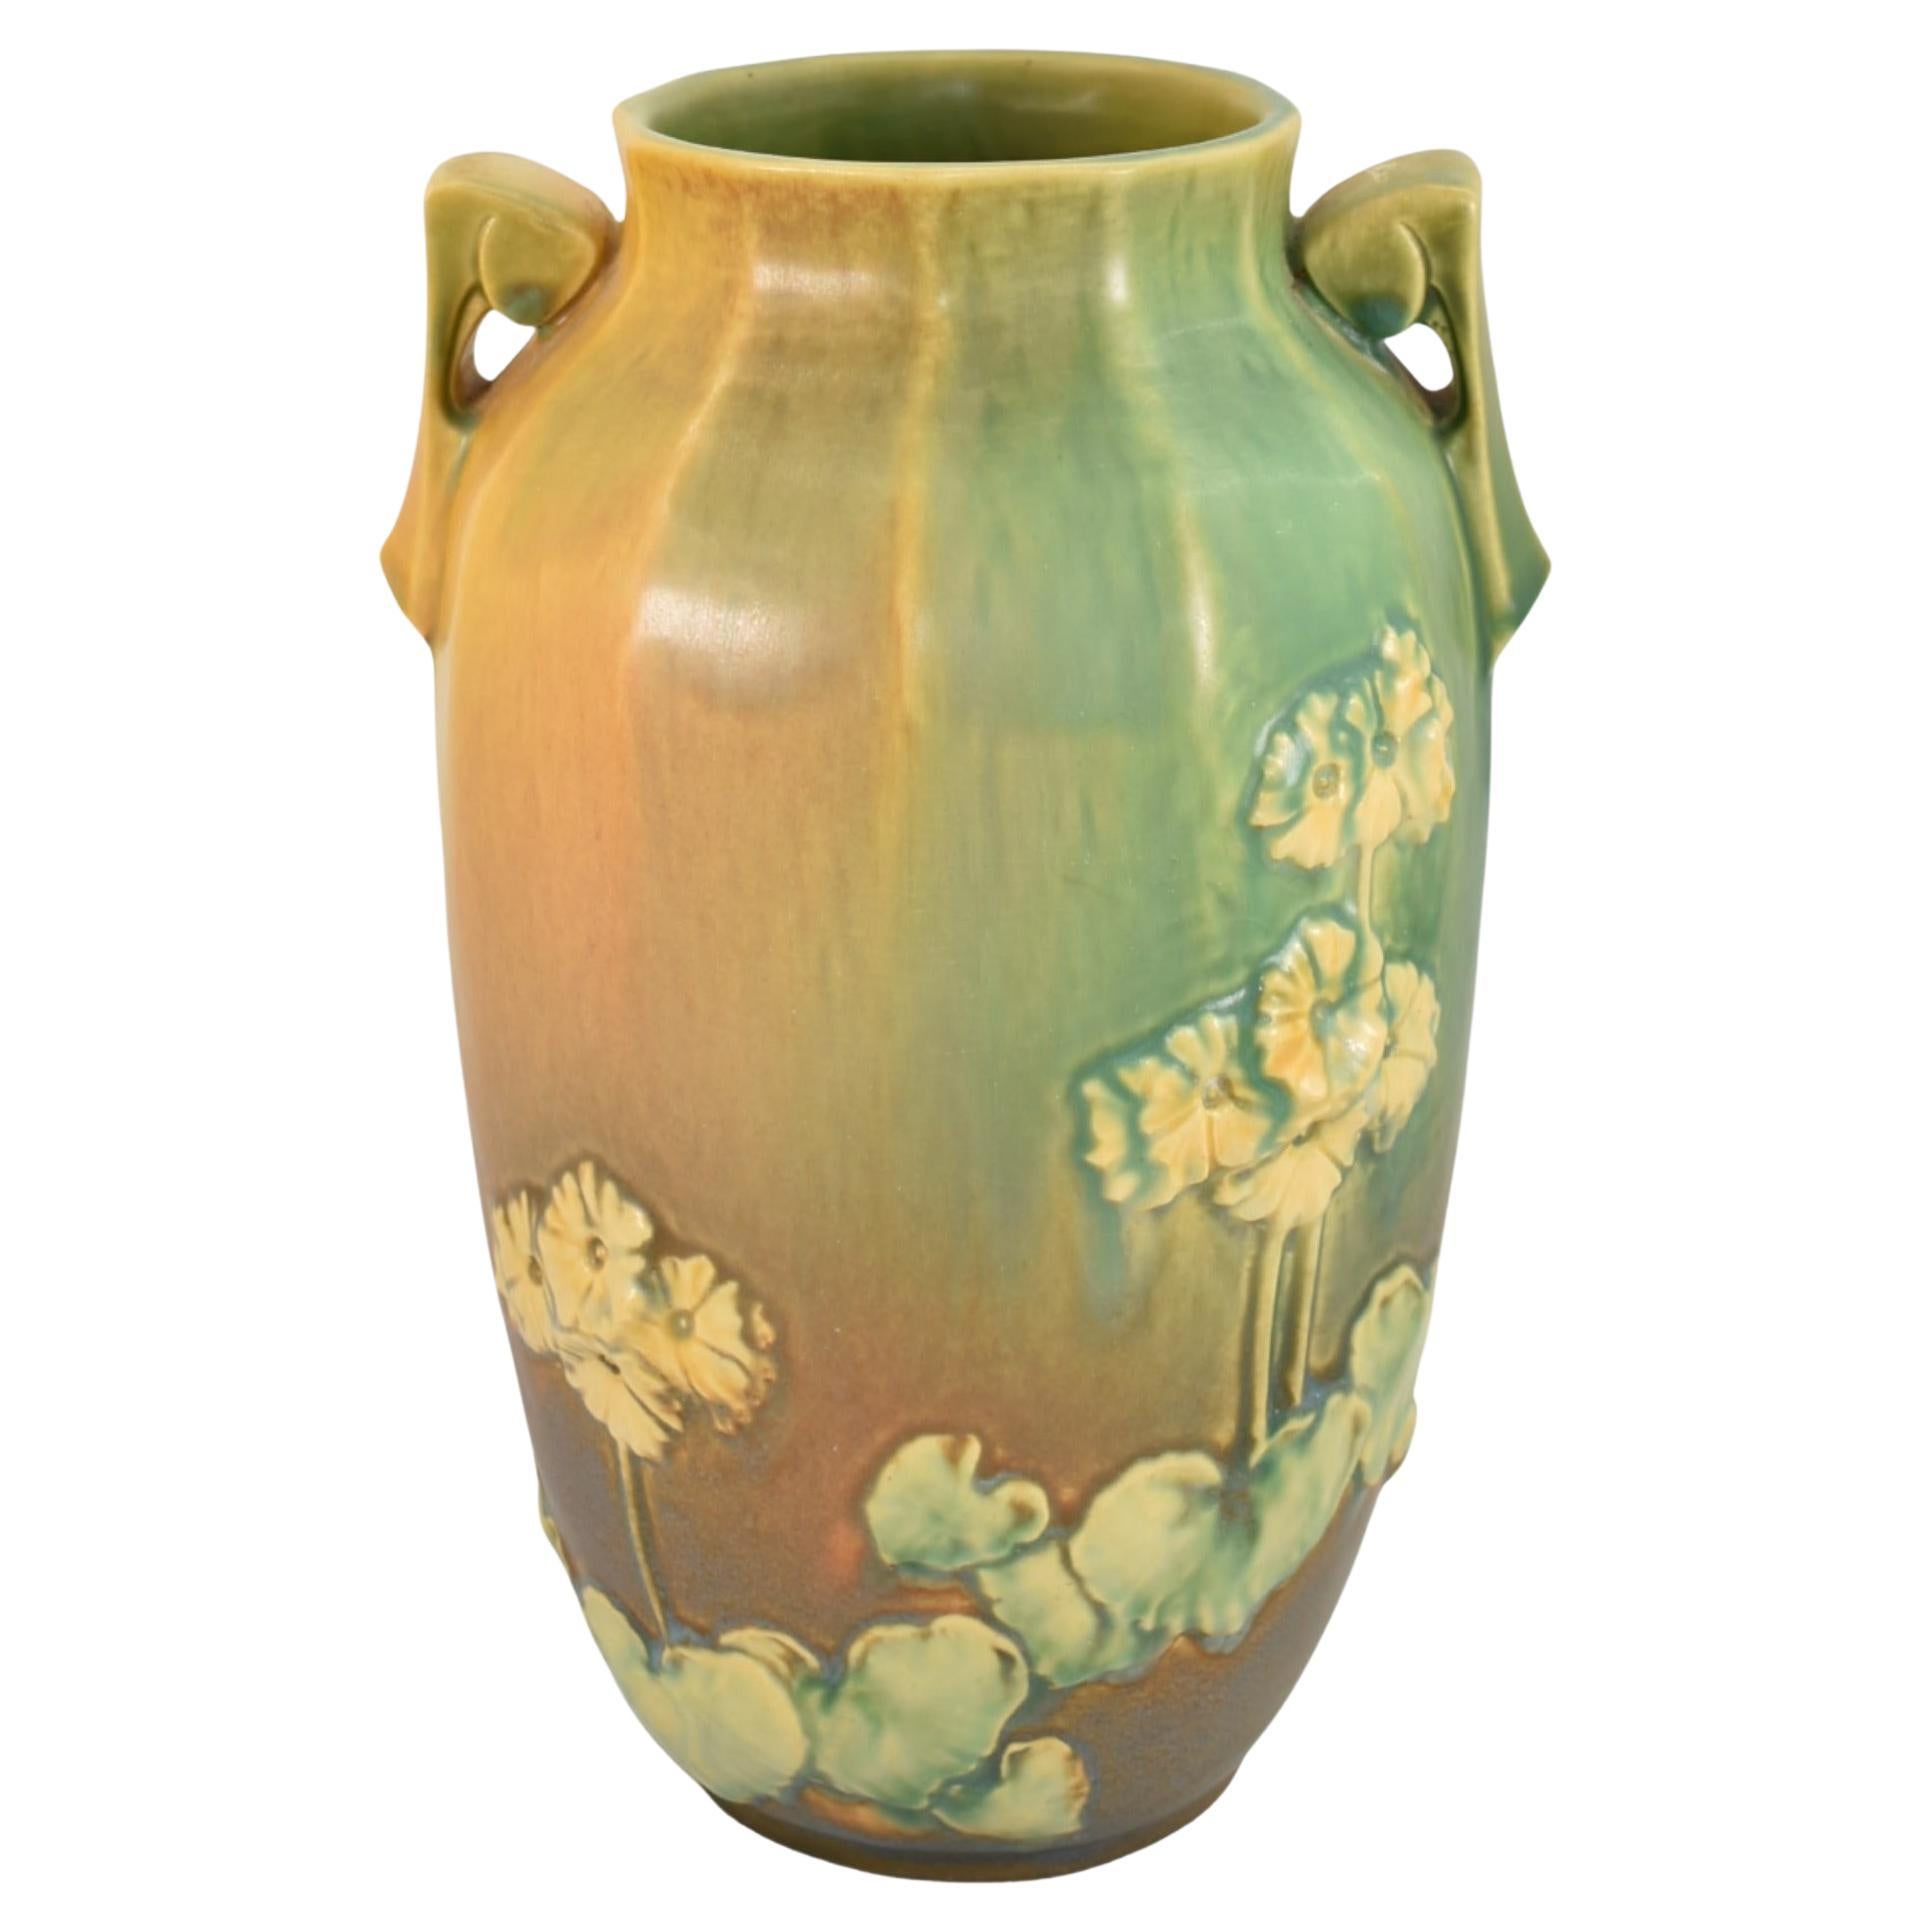 Roseville Primrose Experimentale Dreifachglasur-Vase aus Keramik 1936 Vintage-Keramik im Angebot